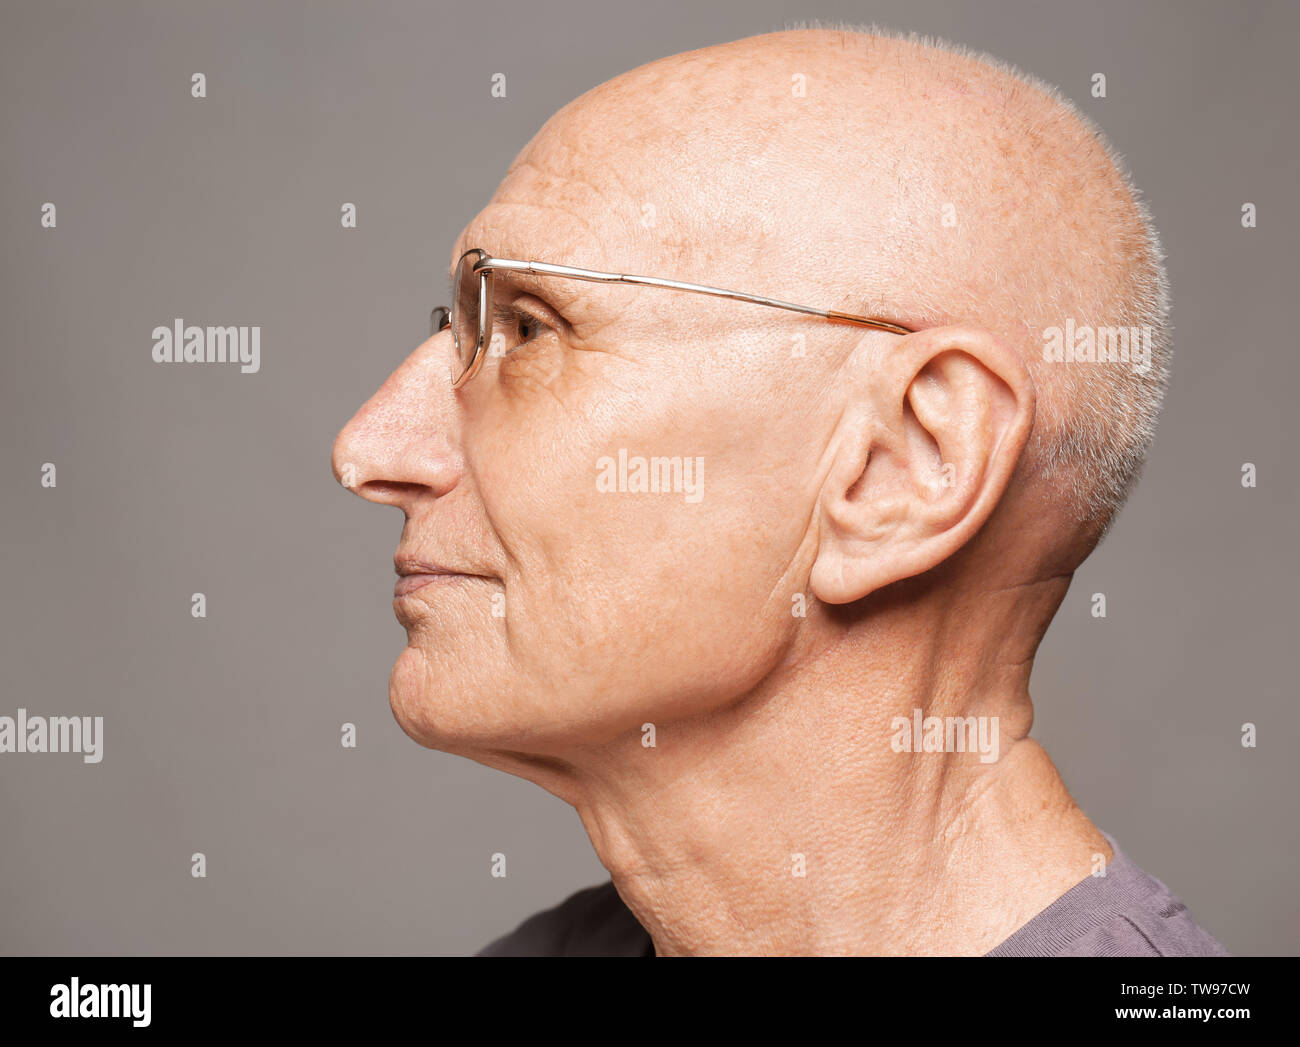 Elderly man on grey background. Hearing problem Stock Photo